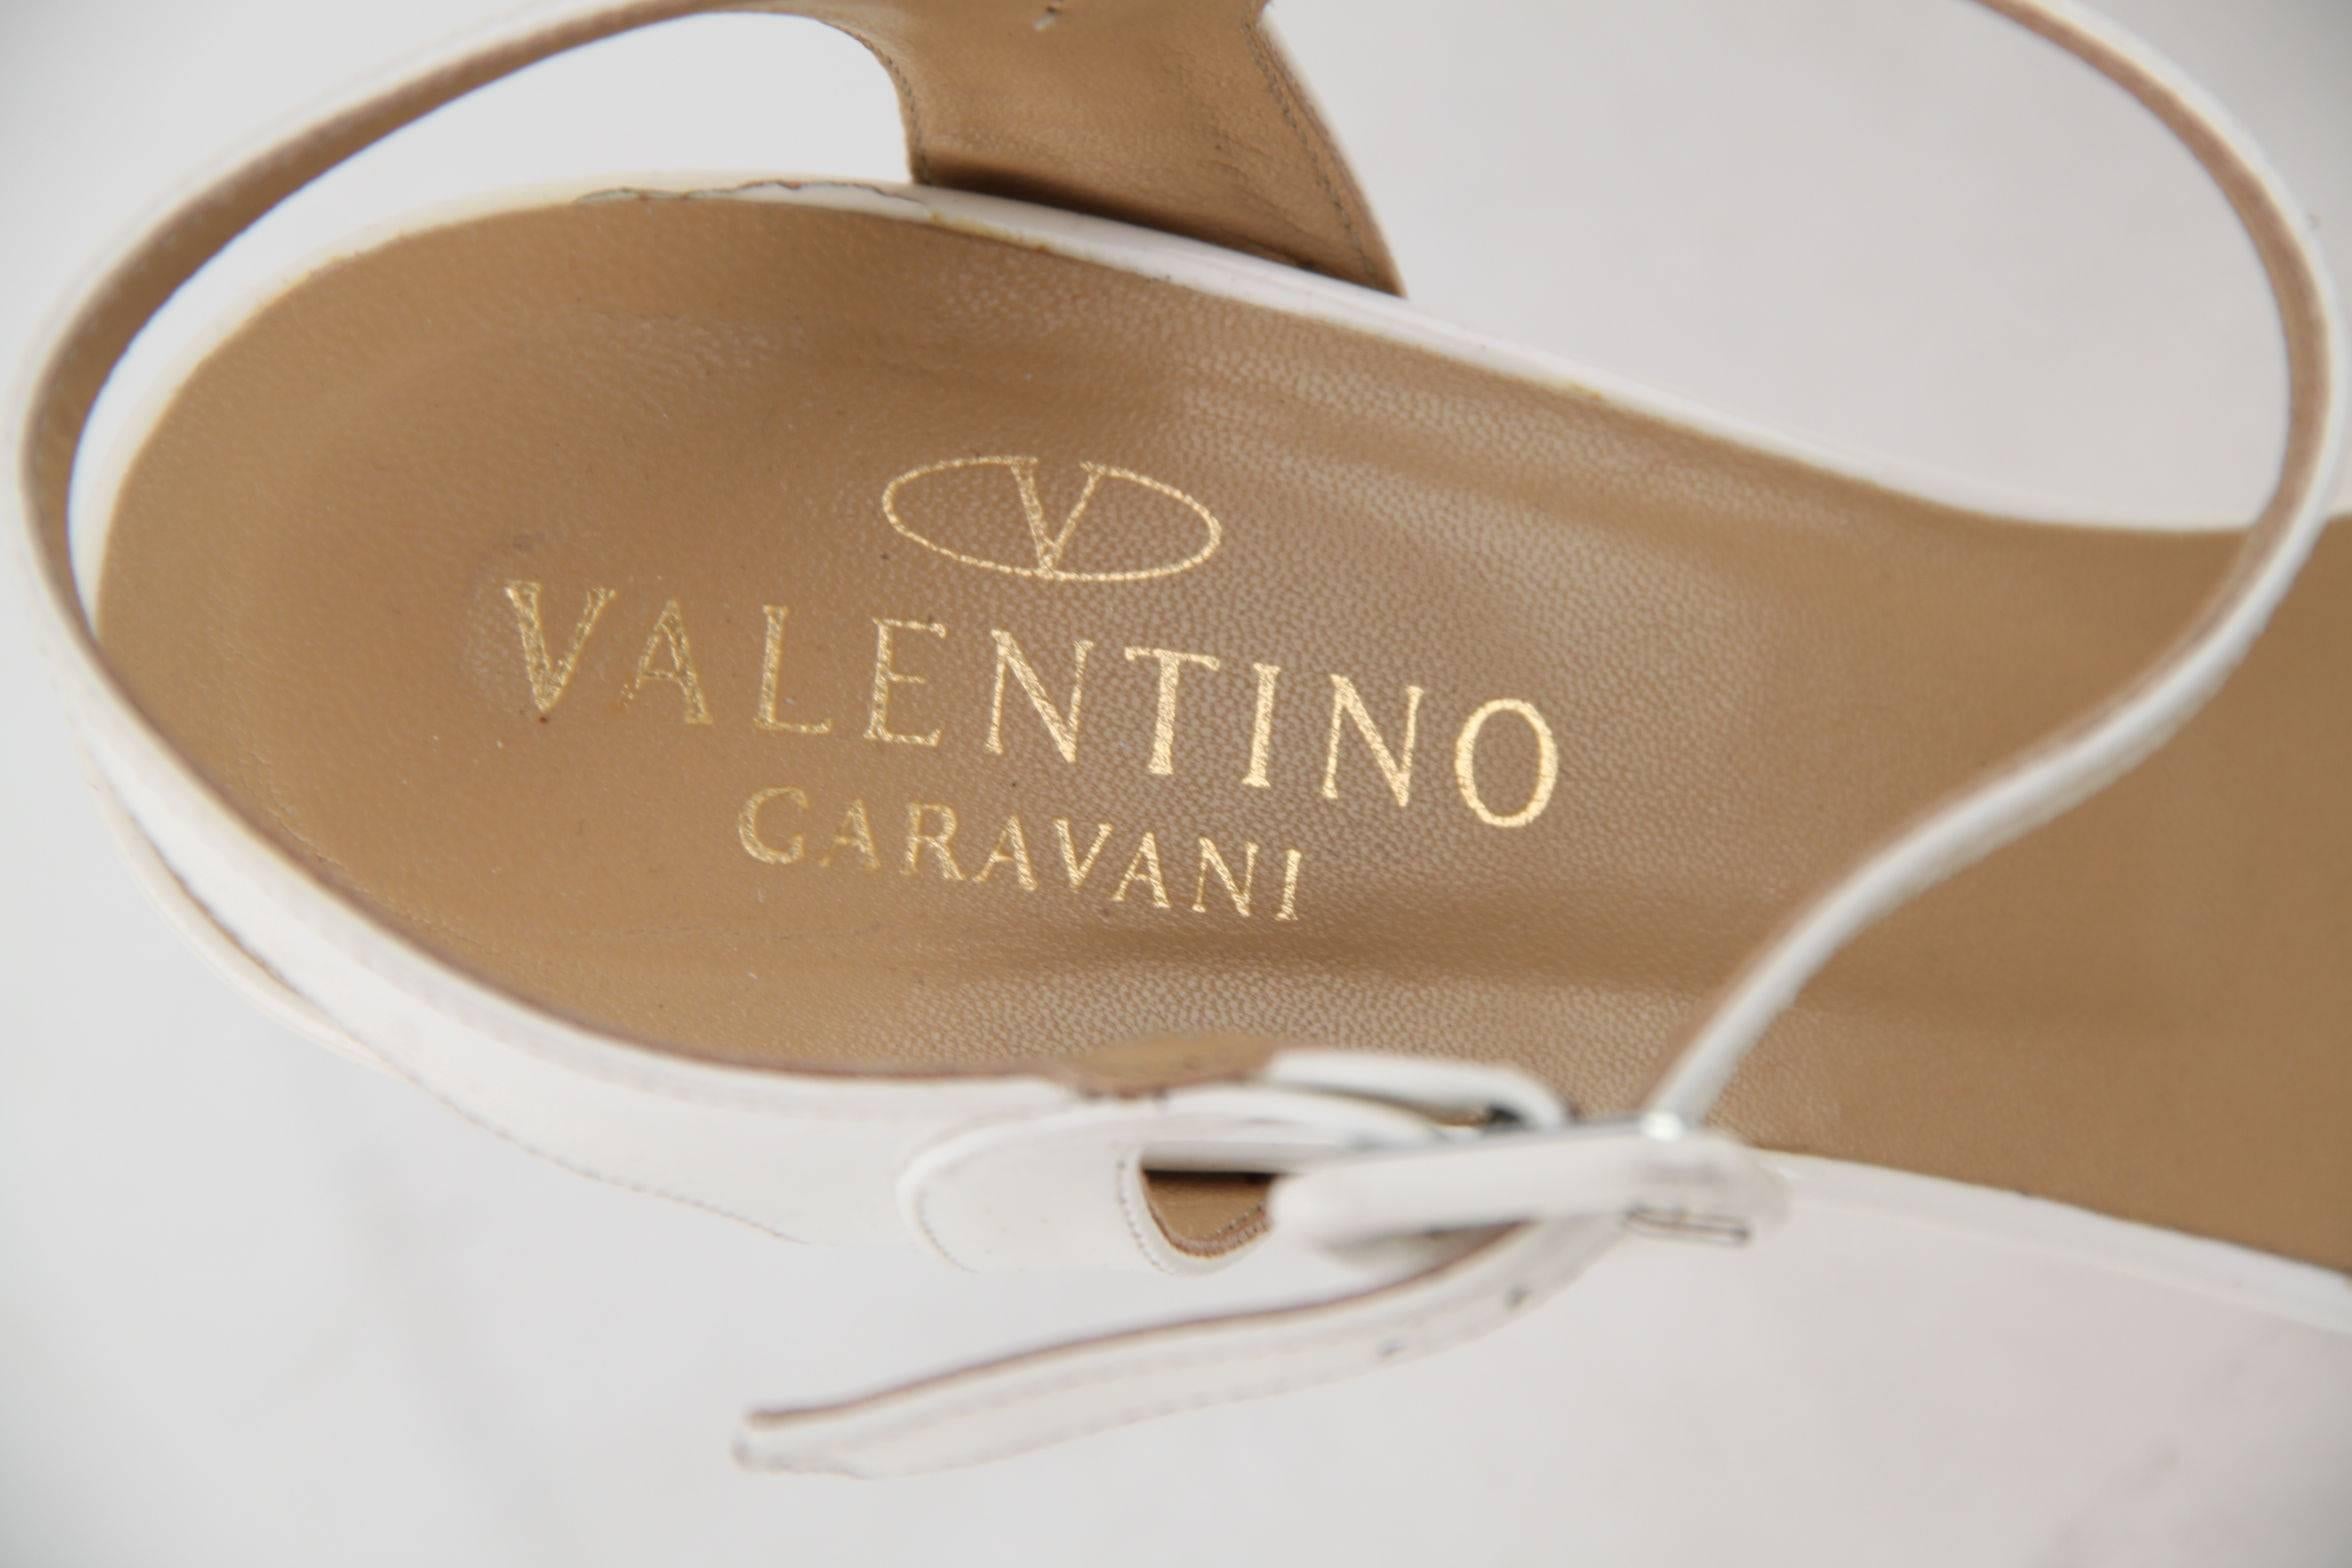  VALENTINO GARAVANI White Patent Leather SANDALS Pumps PLEXIGLASS HEELS Sz 40 2